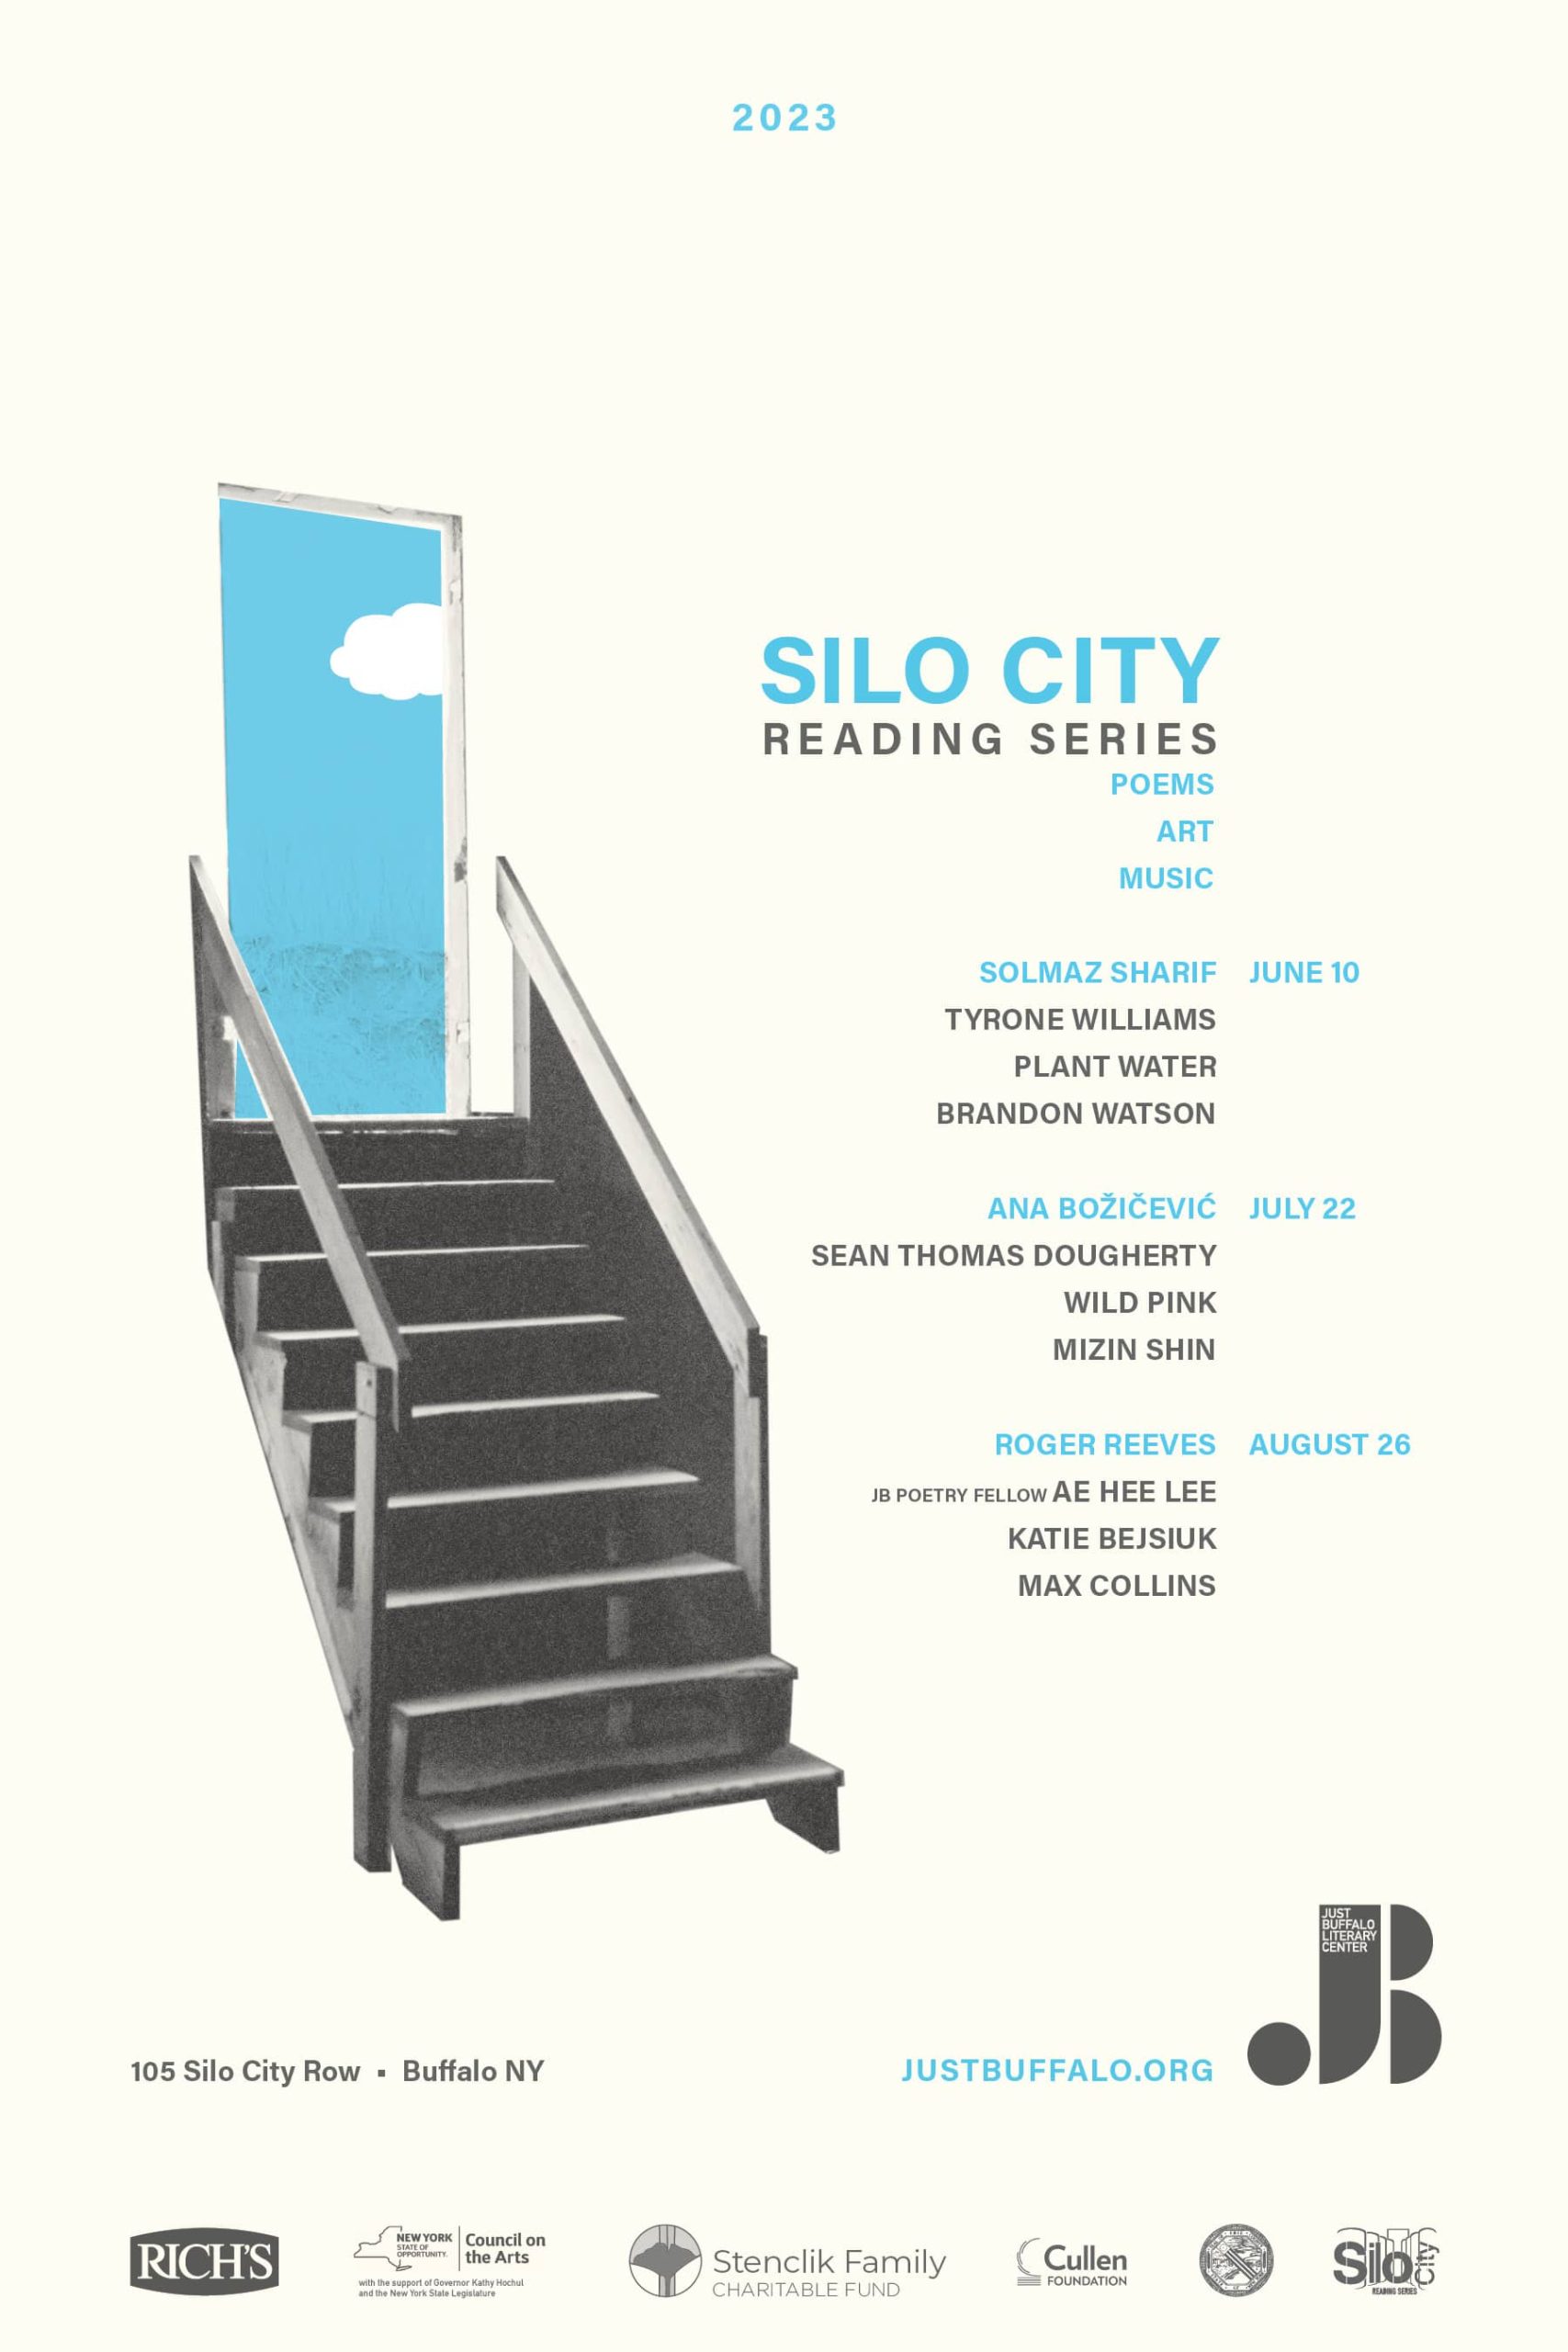 Silo City Reading Series season poster 2023